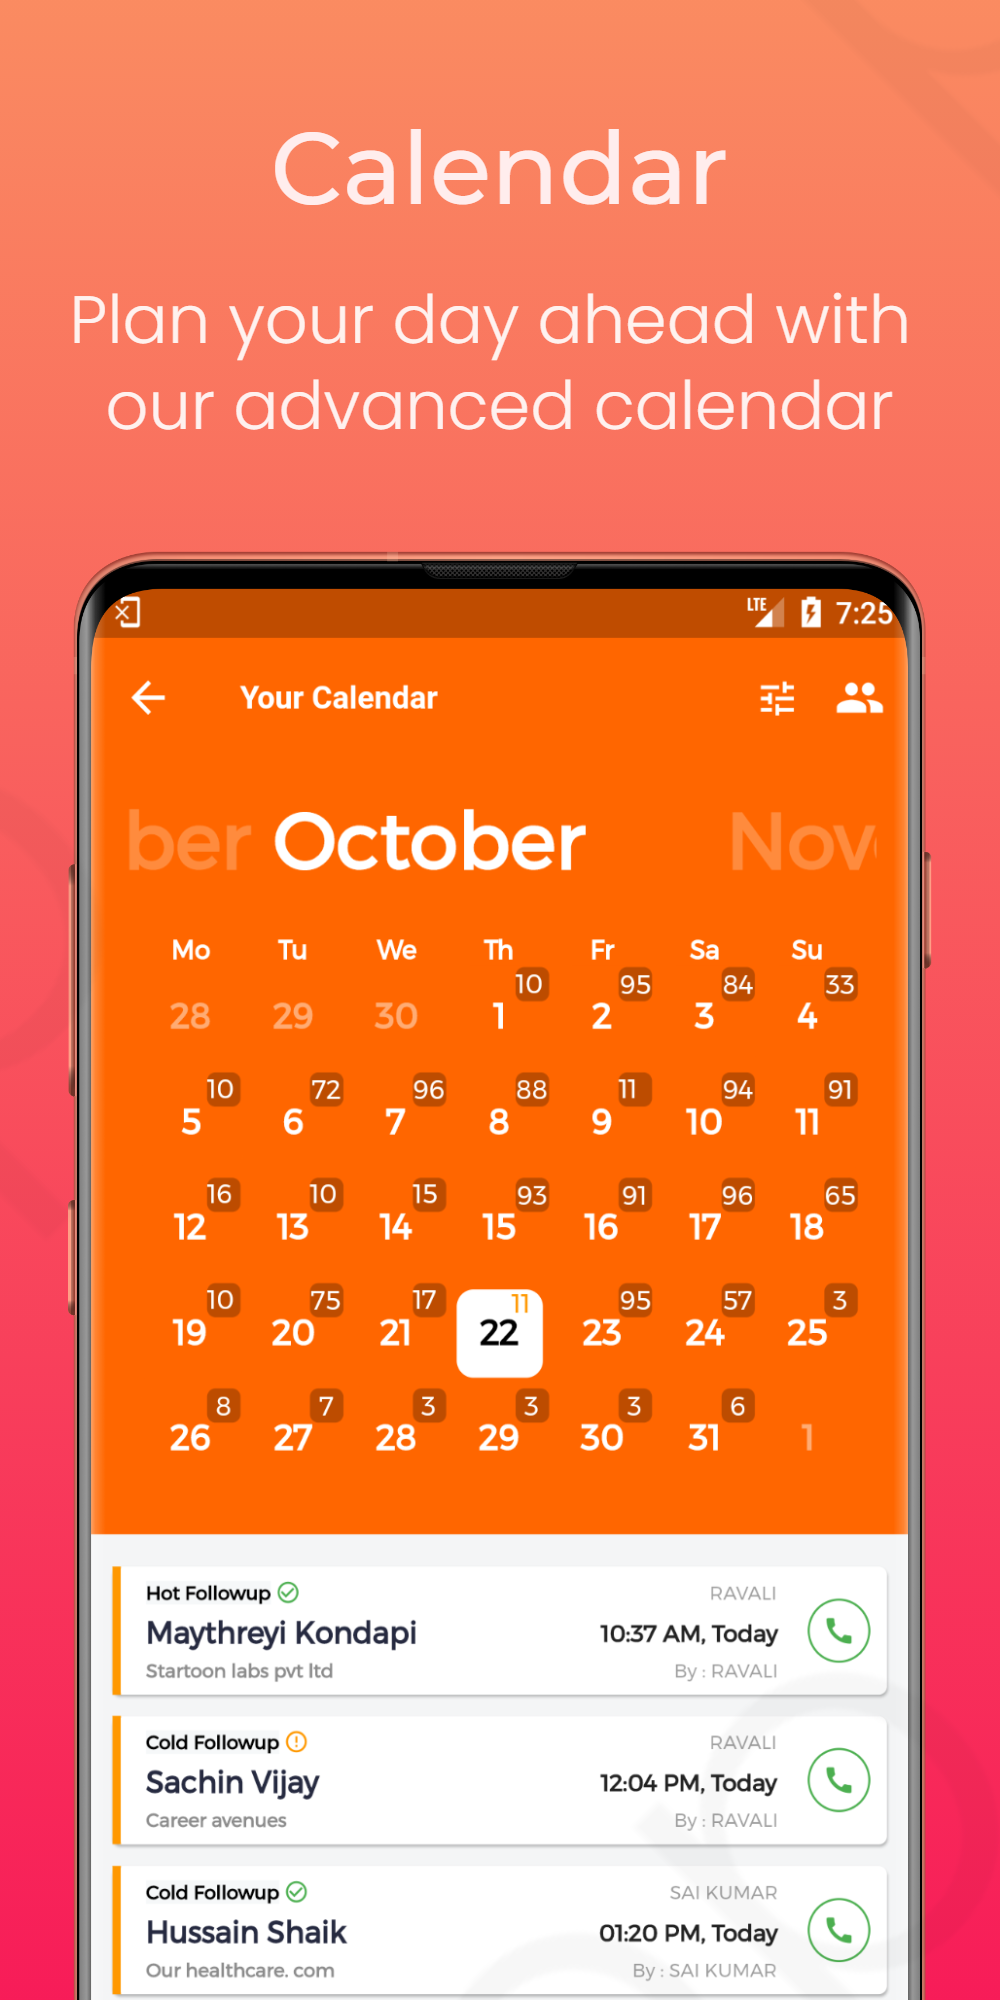 Calendar